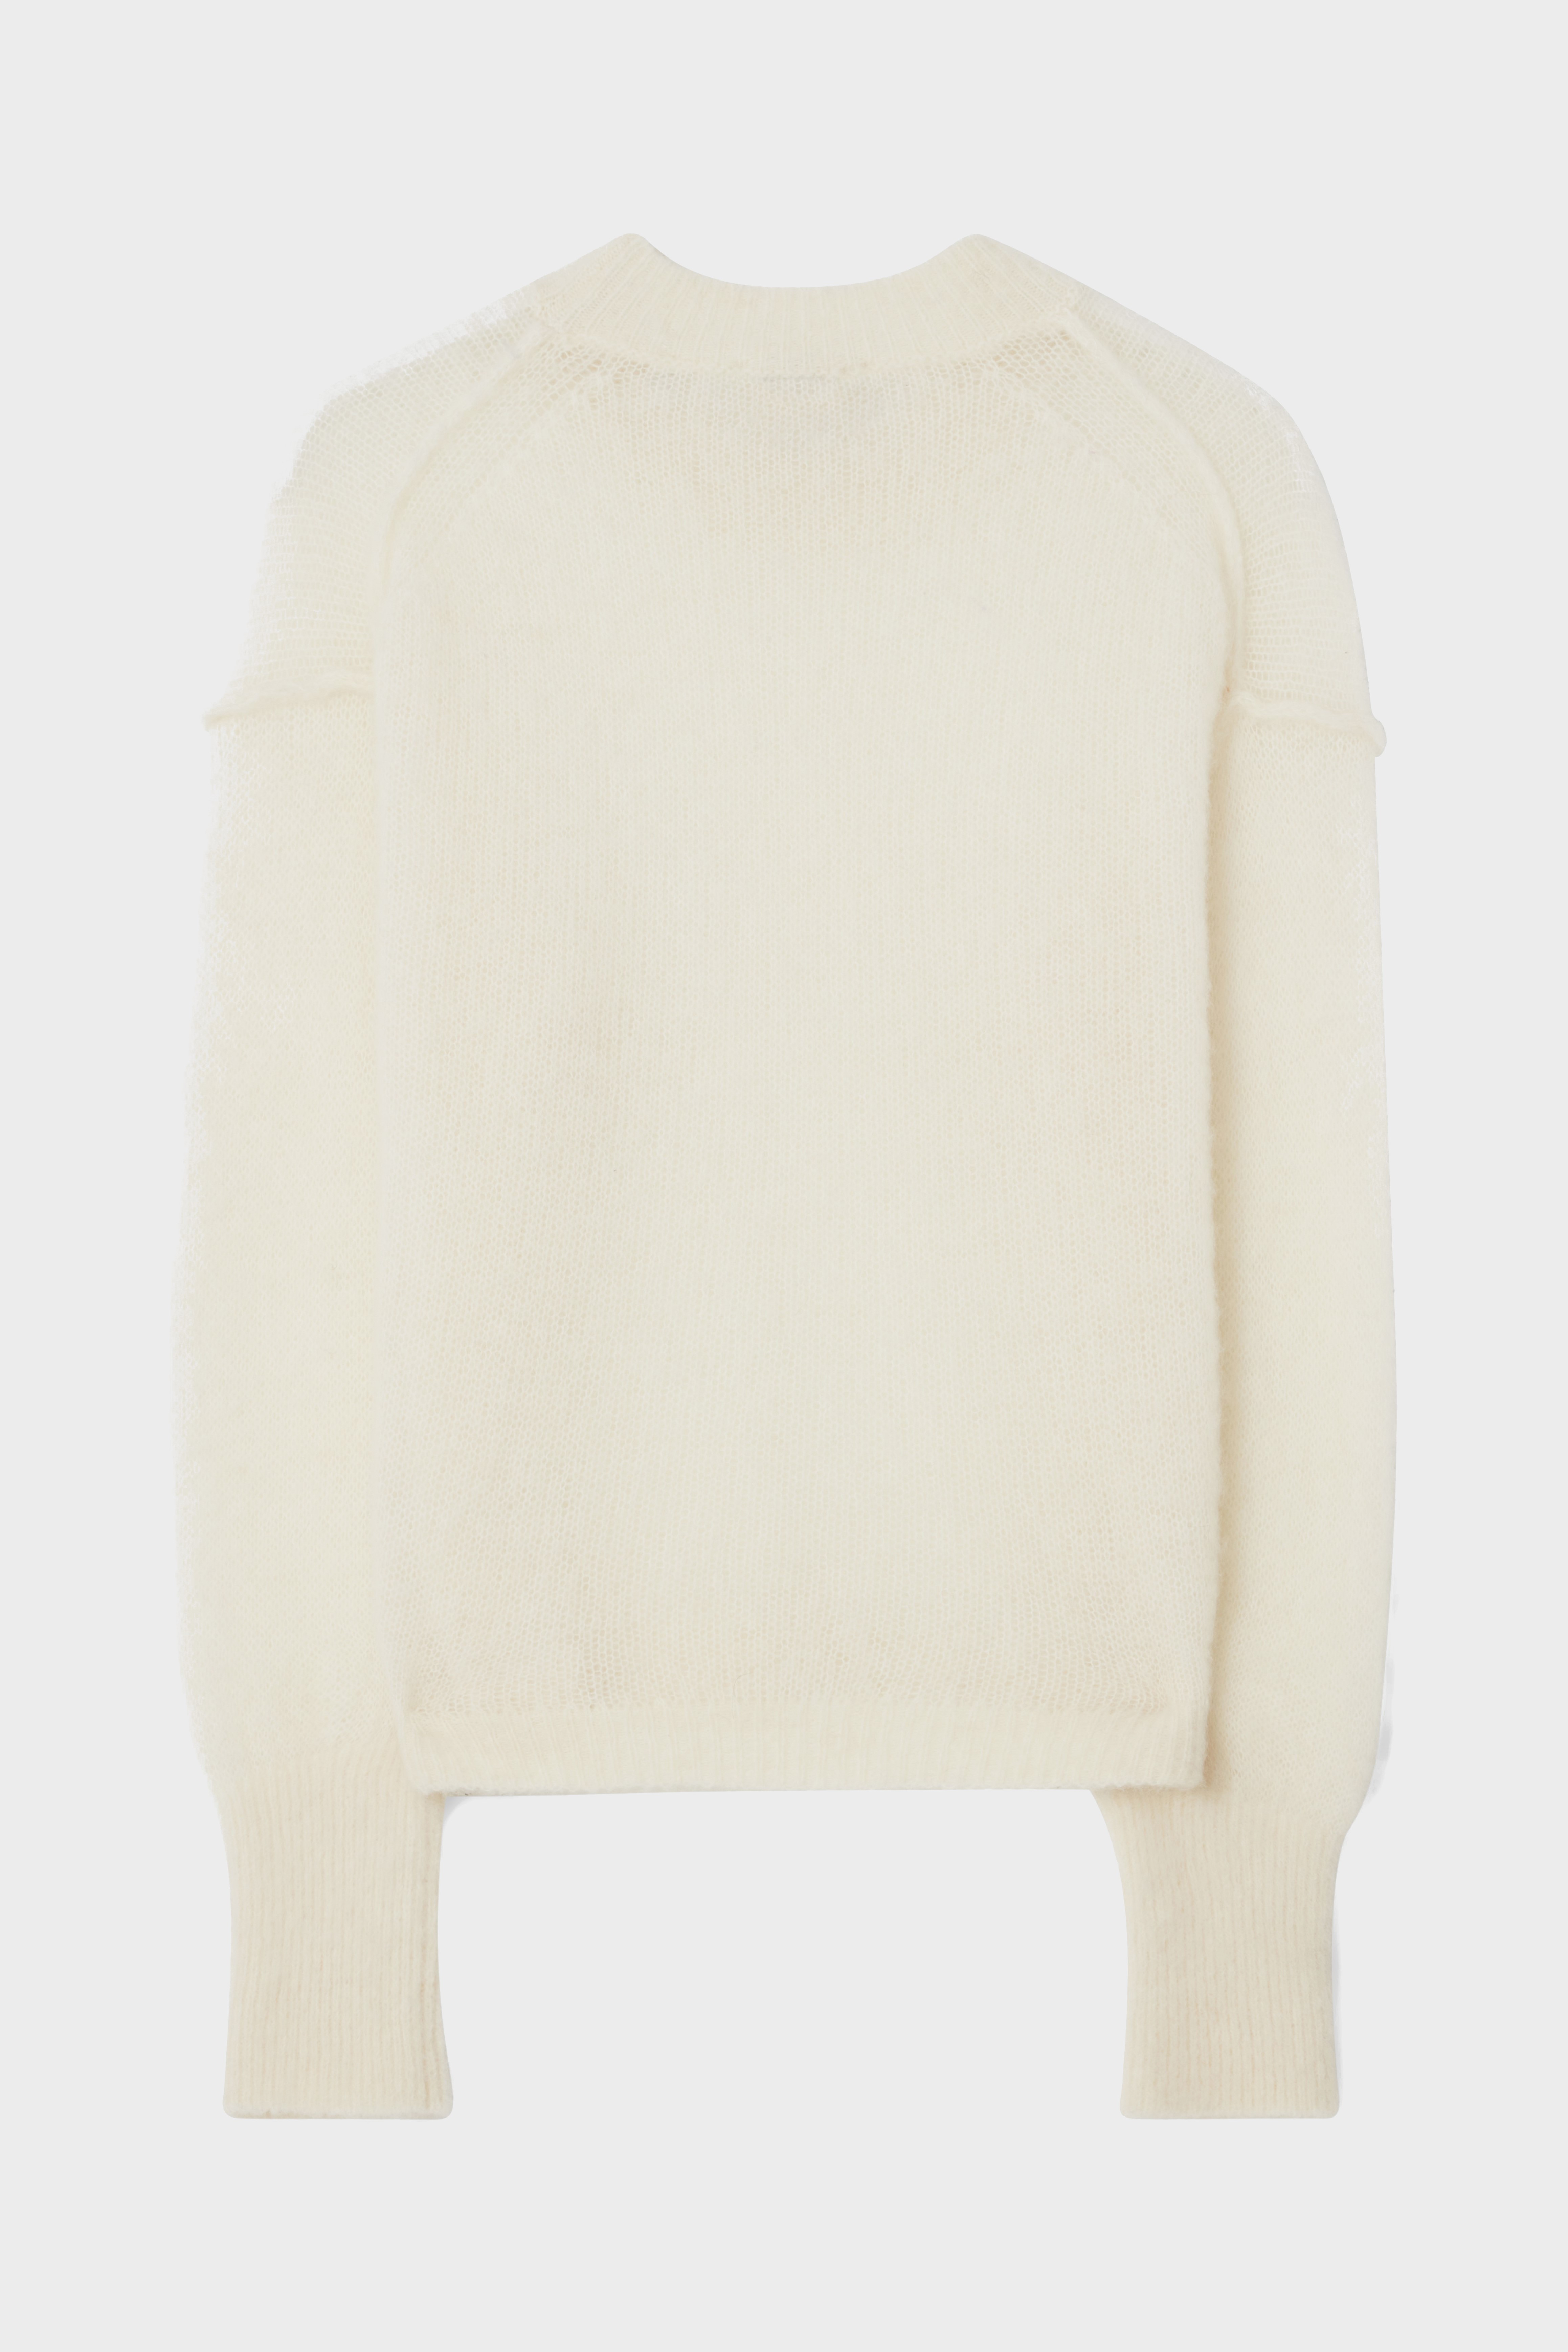 DAGMAR Brushed Alpaca Knit Sweater in Off White S